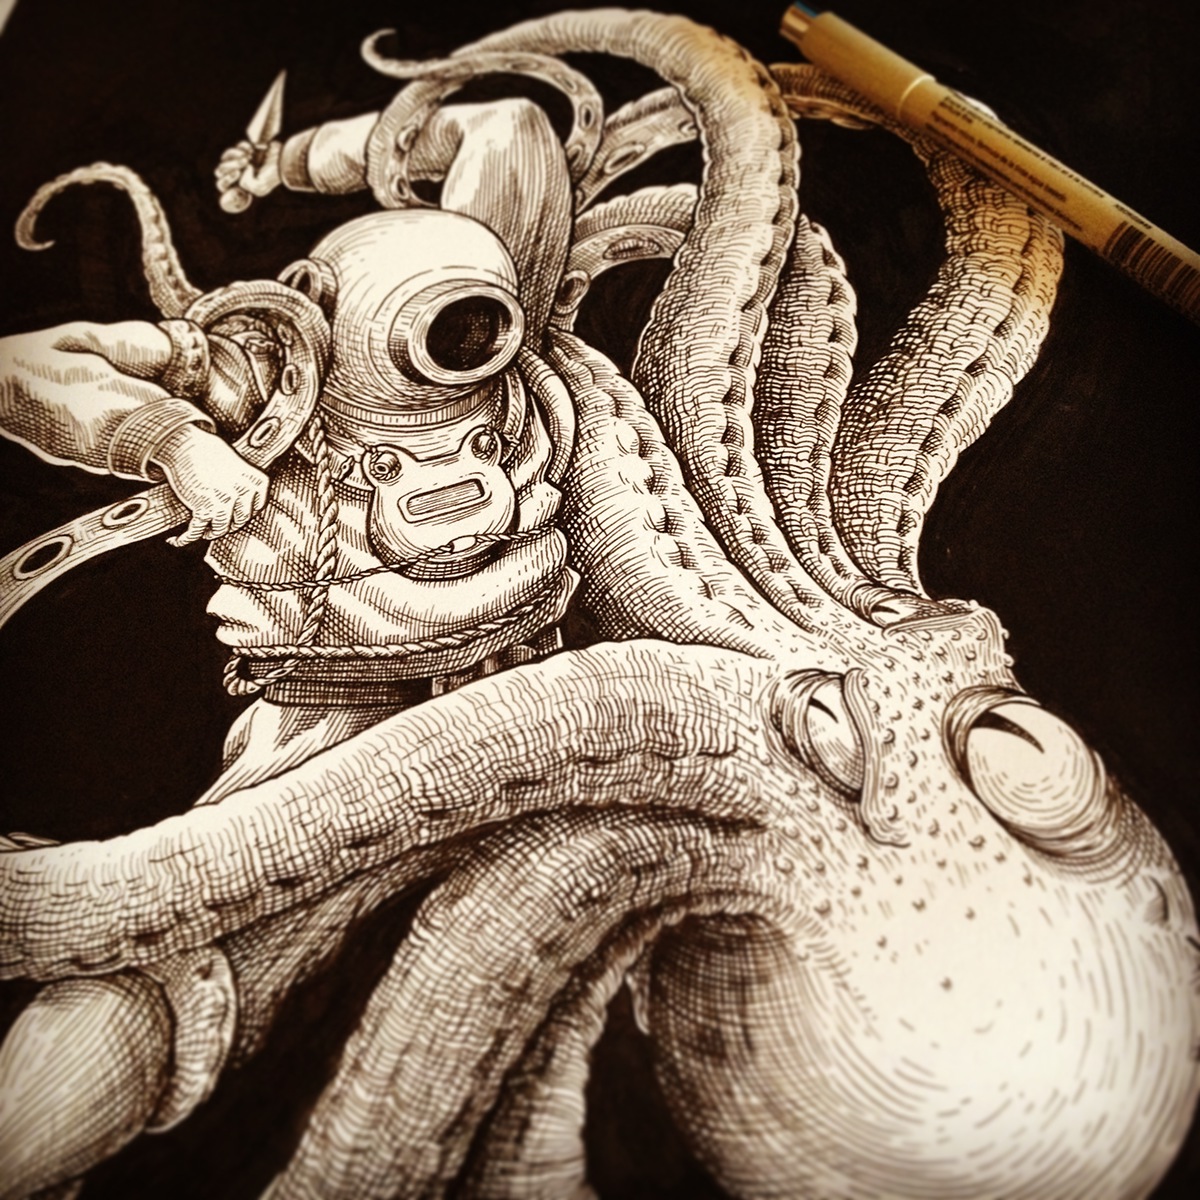 apparel Deep Sea Diver scubadiver kraken octopus etching black and white t-shirt micron